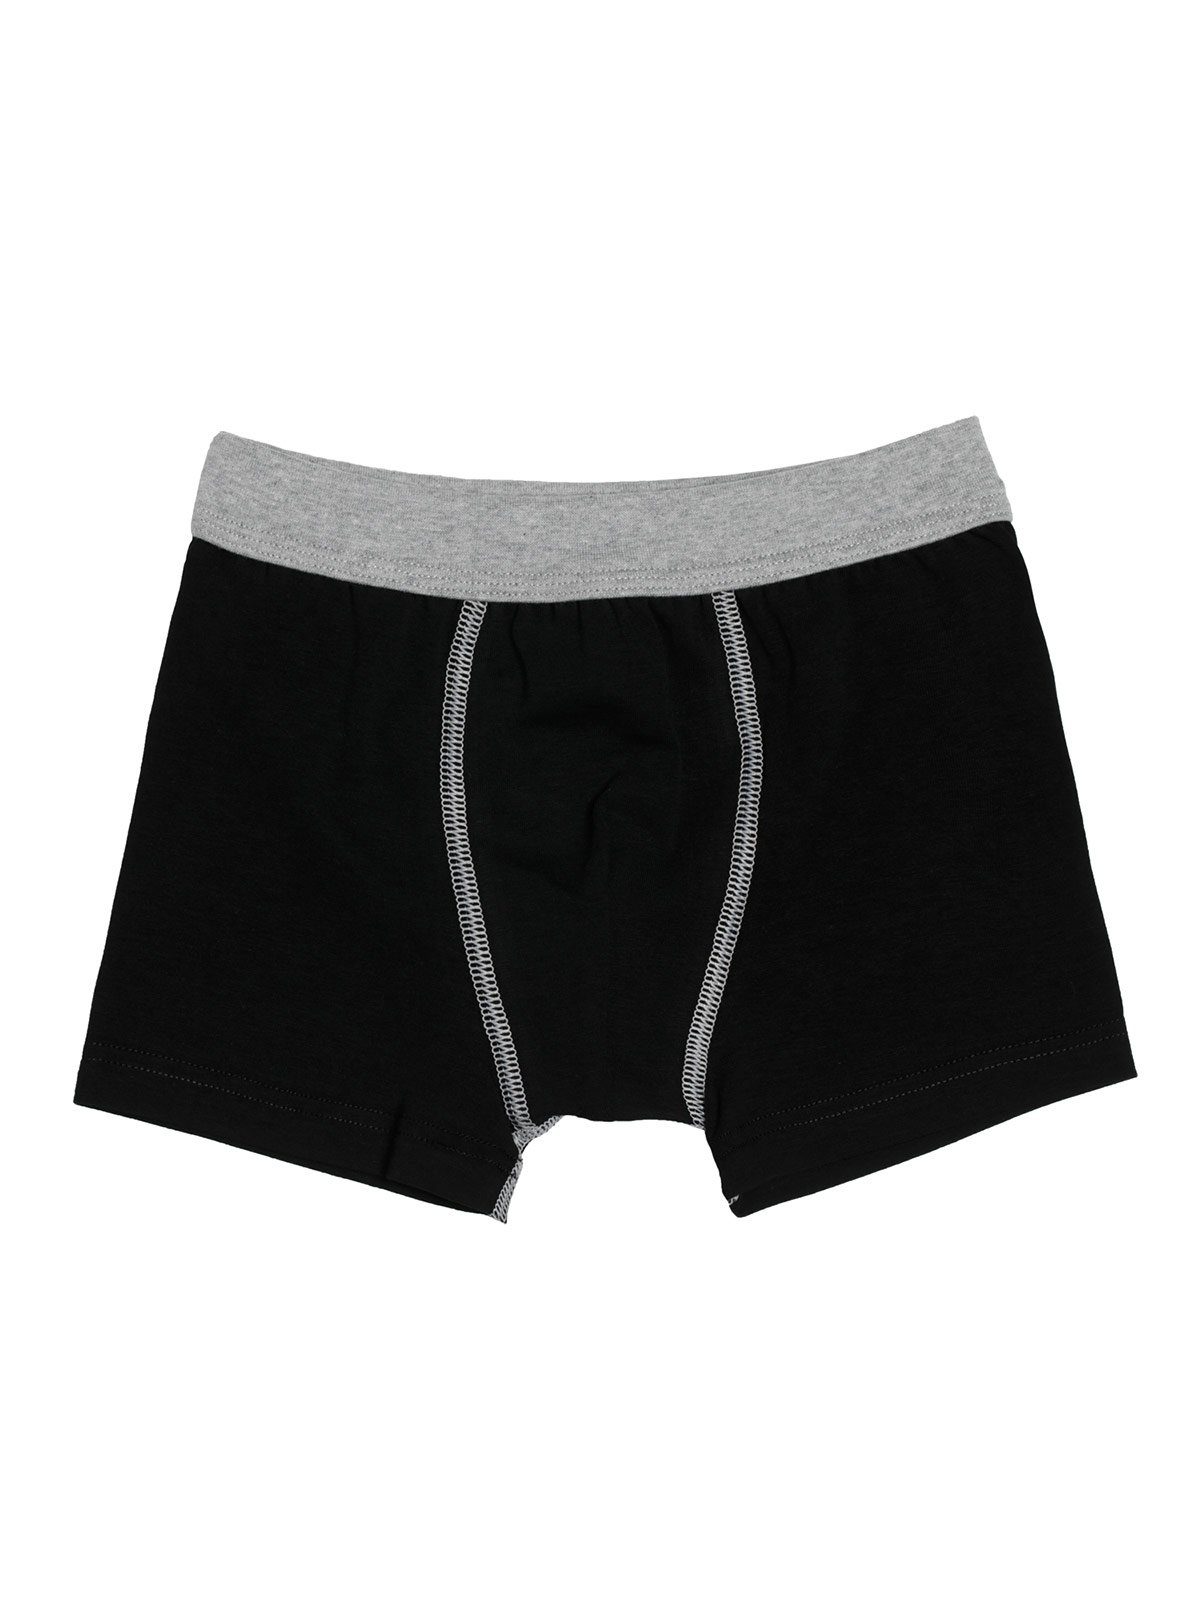 Sweety for Kids Boxershorts colored multi Jersey Pack 3-St) Beinausschnitt Shorts Knaben (Packung, 3er Single gerader